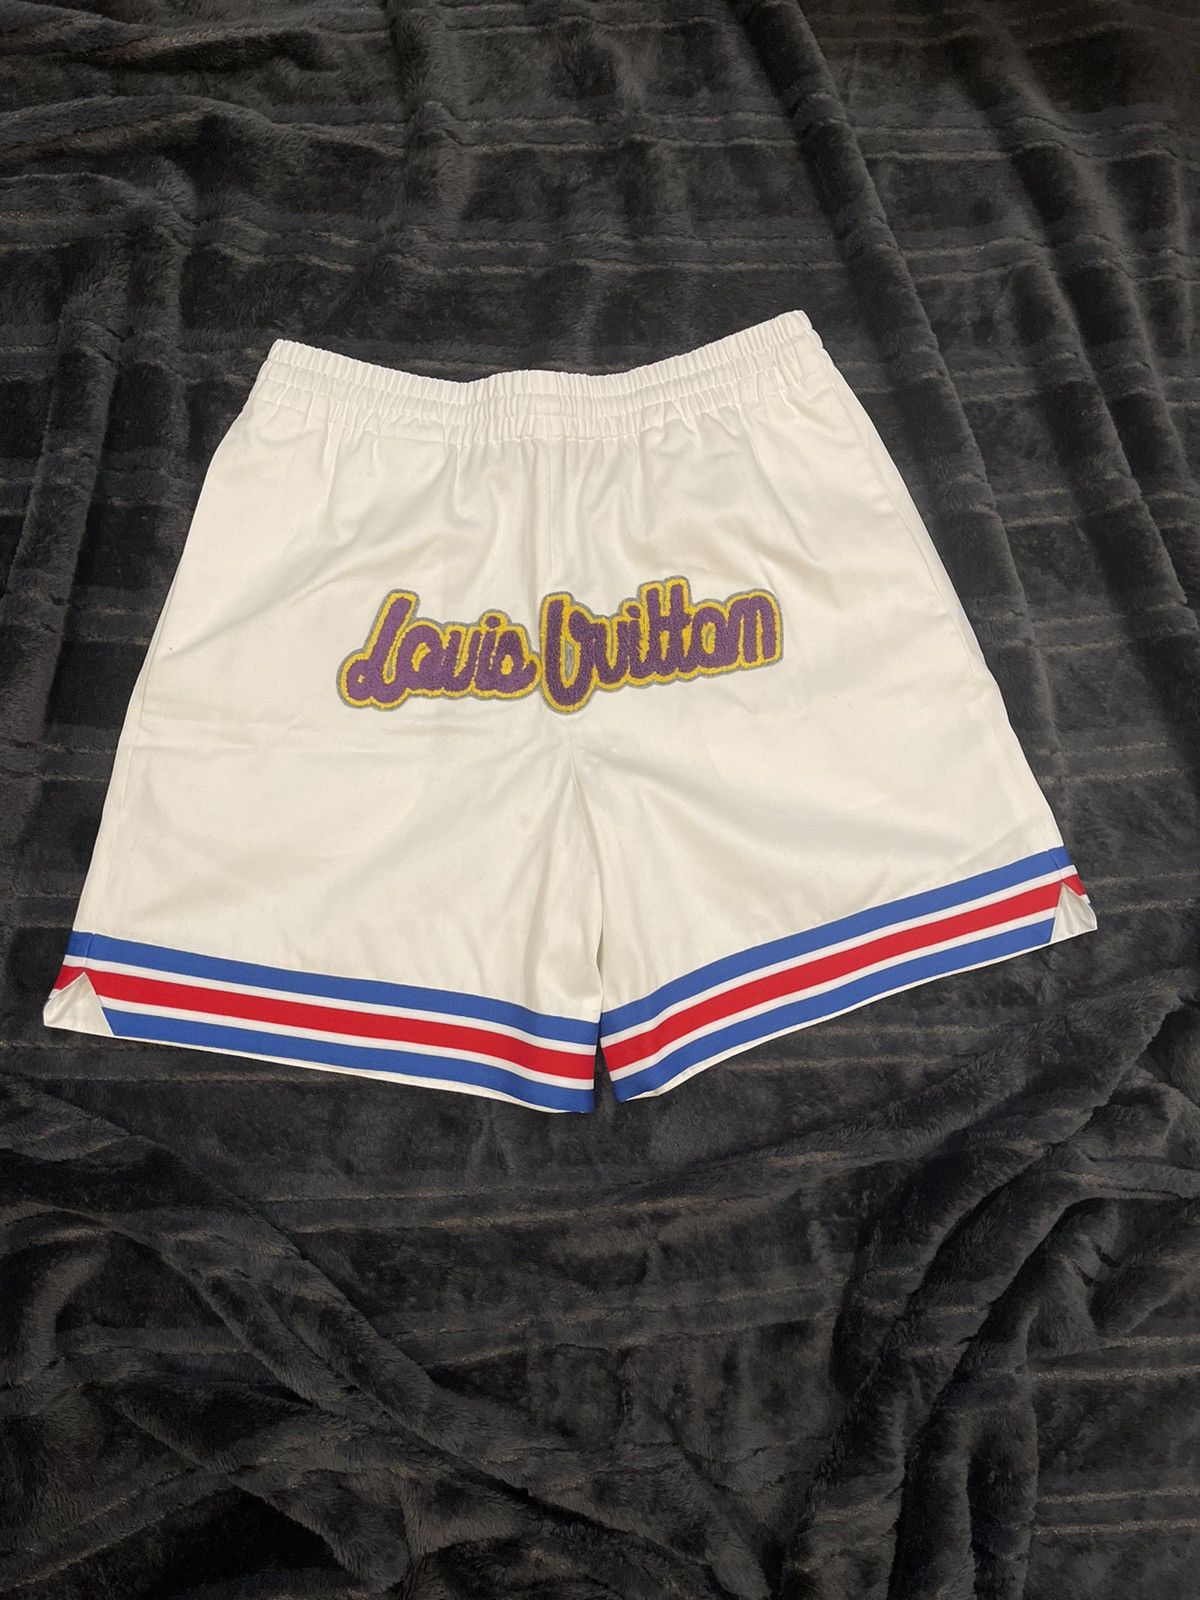 Louis Vuitton NBA White Basketball Shorts